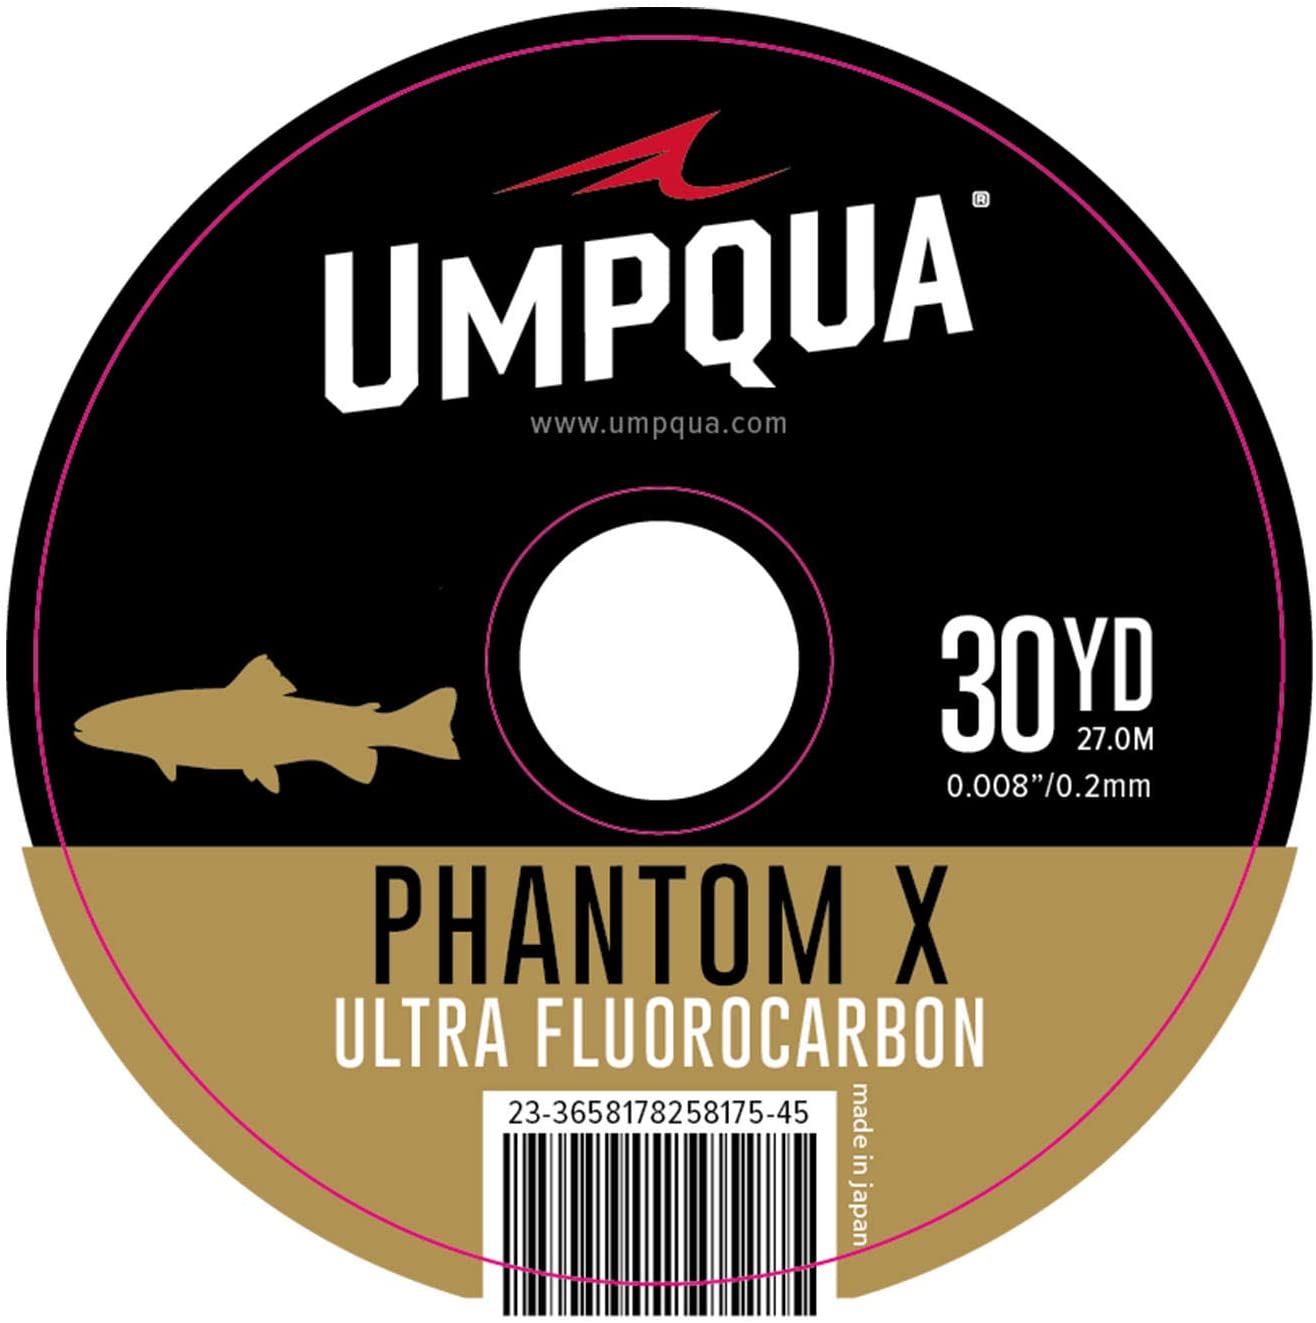 Umpqua Phantom X Ultra Fluorocarbon